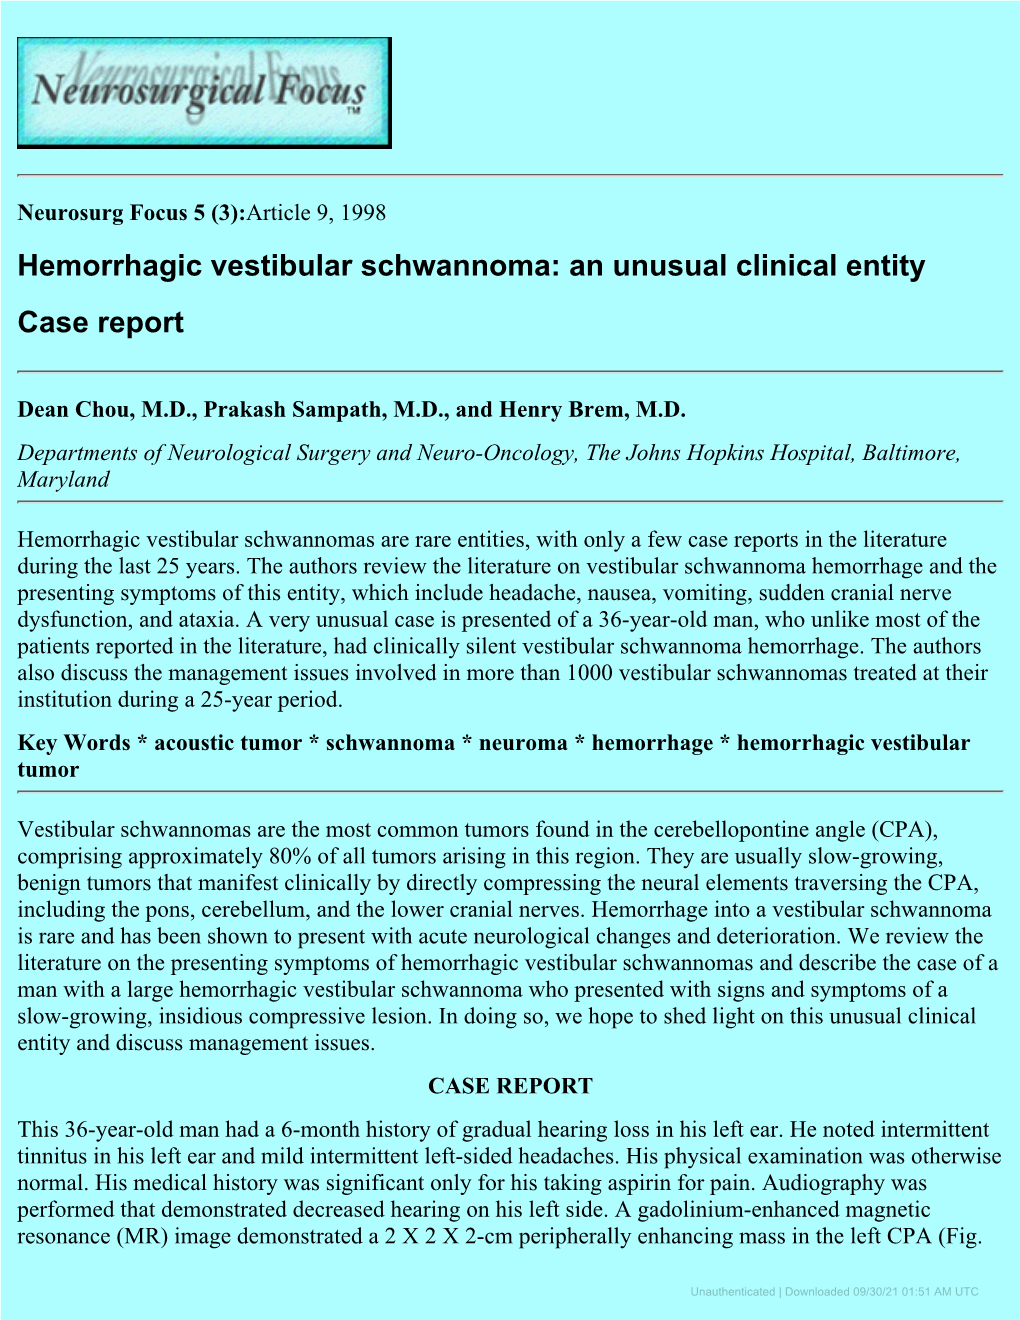 Hemorrhagic Vestibular Schwannoma: an Unusual Clinical Entity Case Report